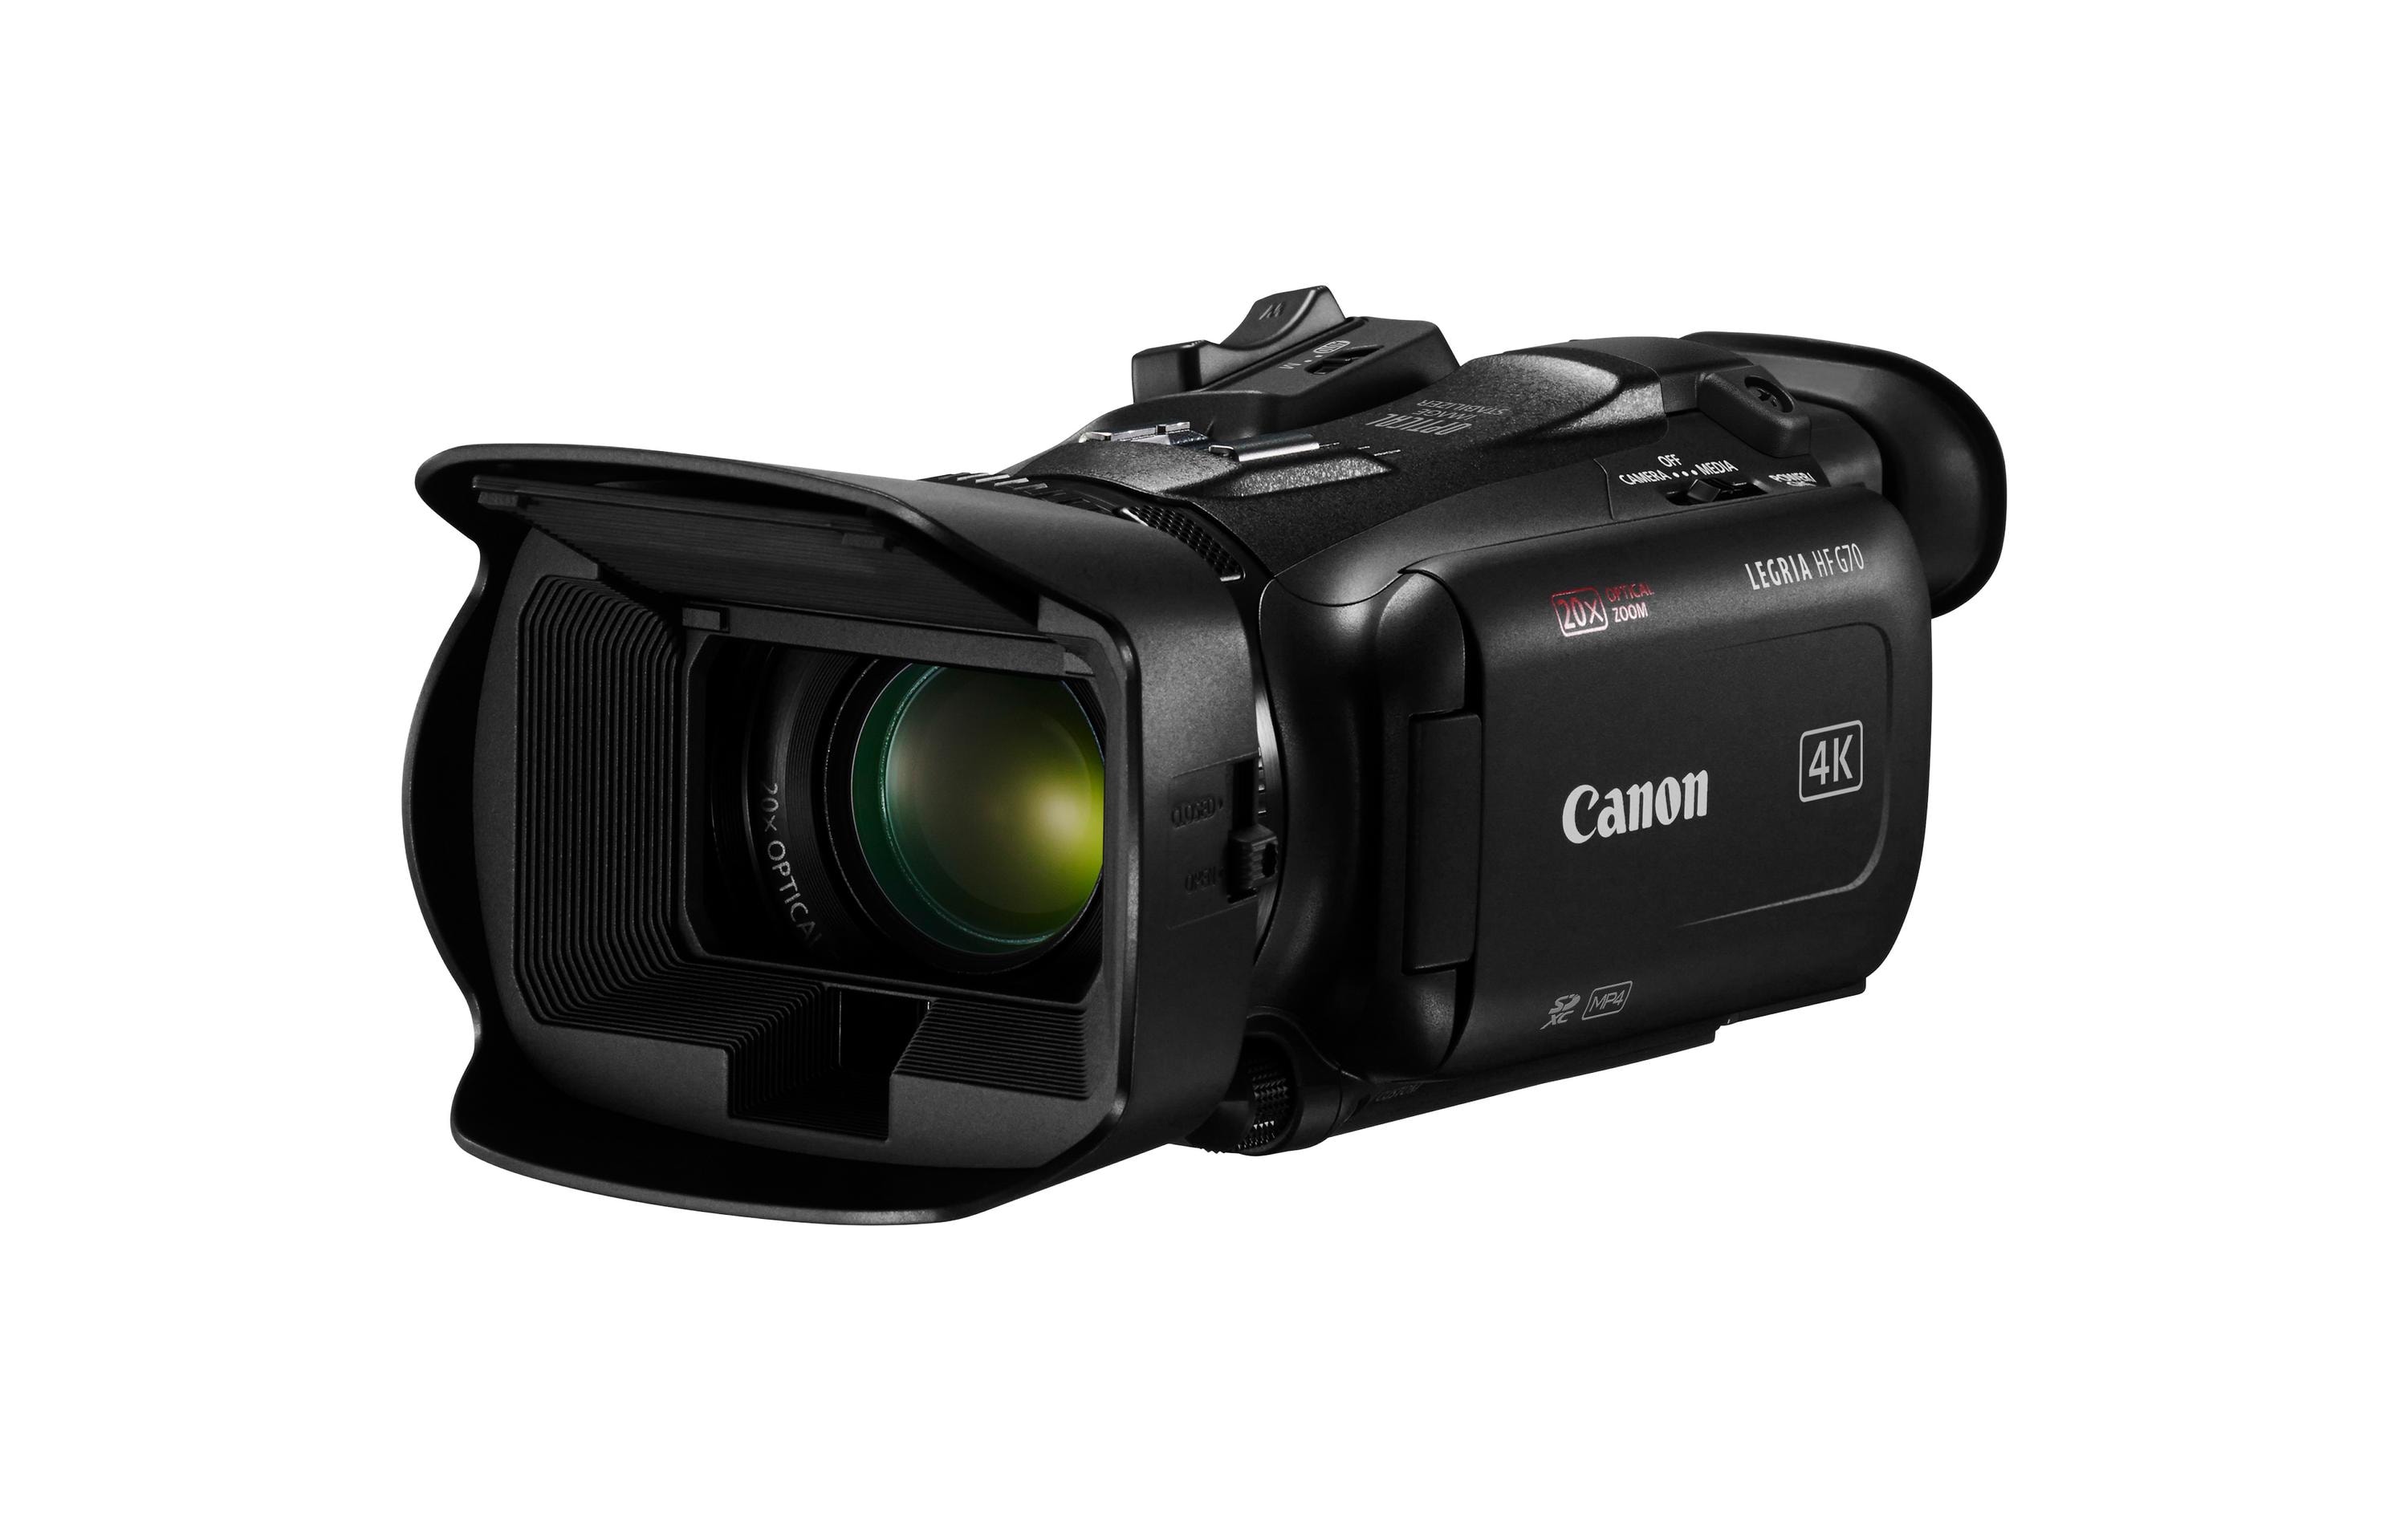 Canon Videokamera Legria HF G70